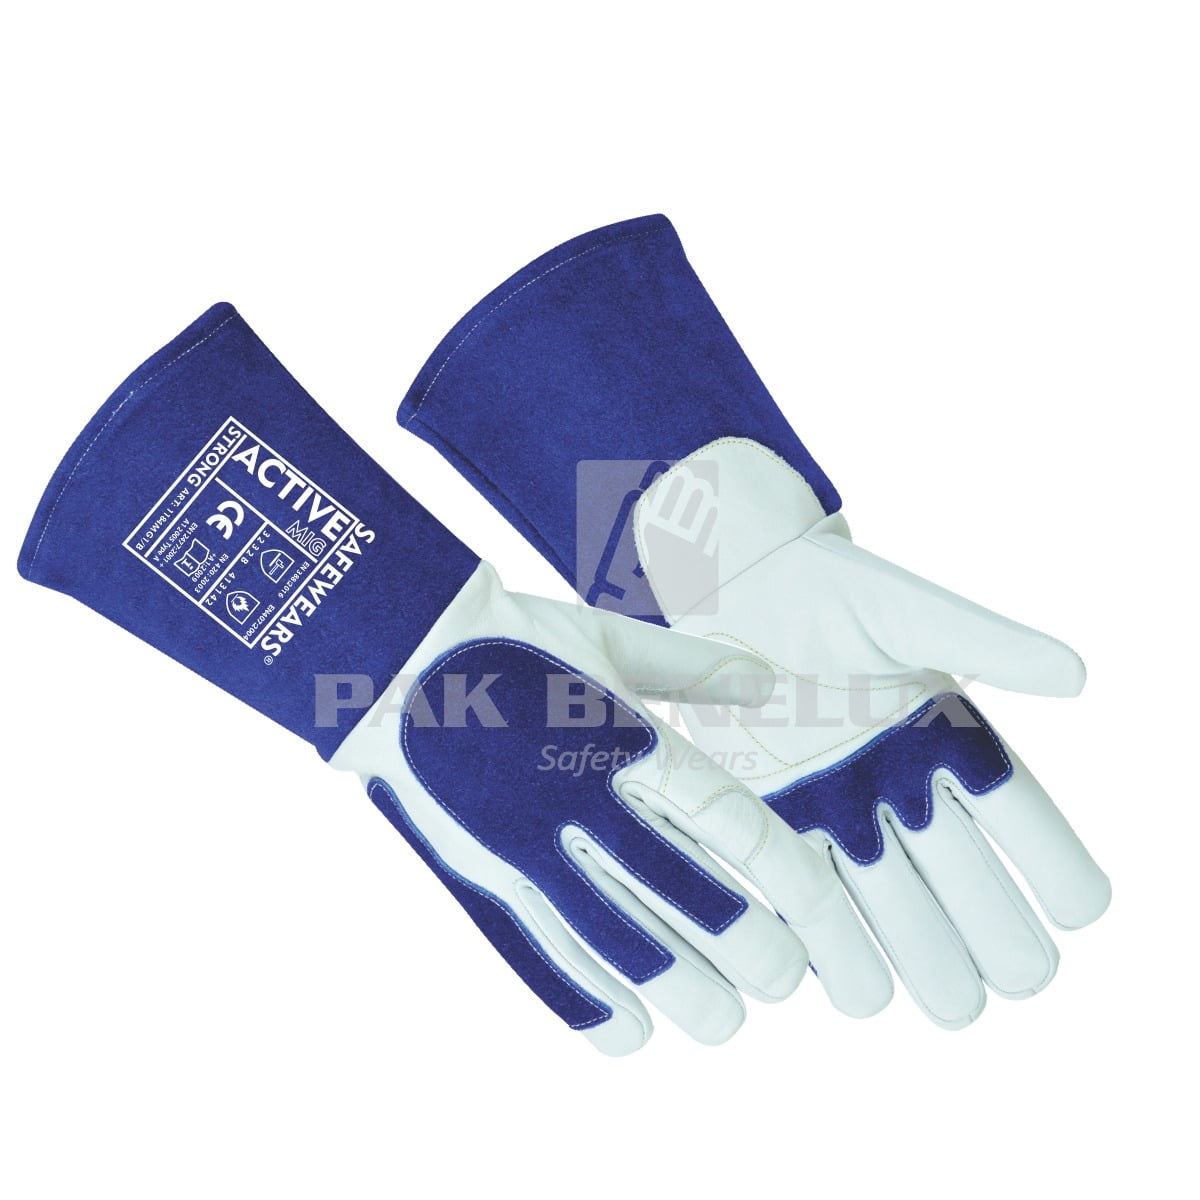 MIG Gloves Manufacturer in Pakistan